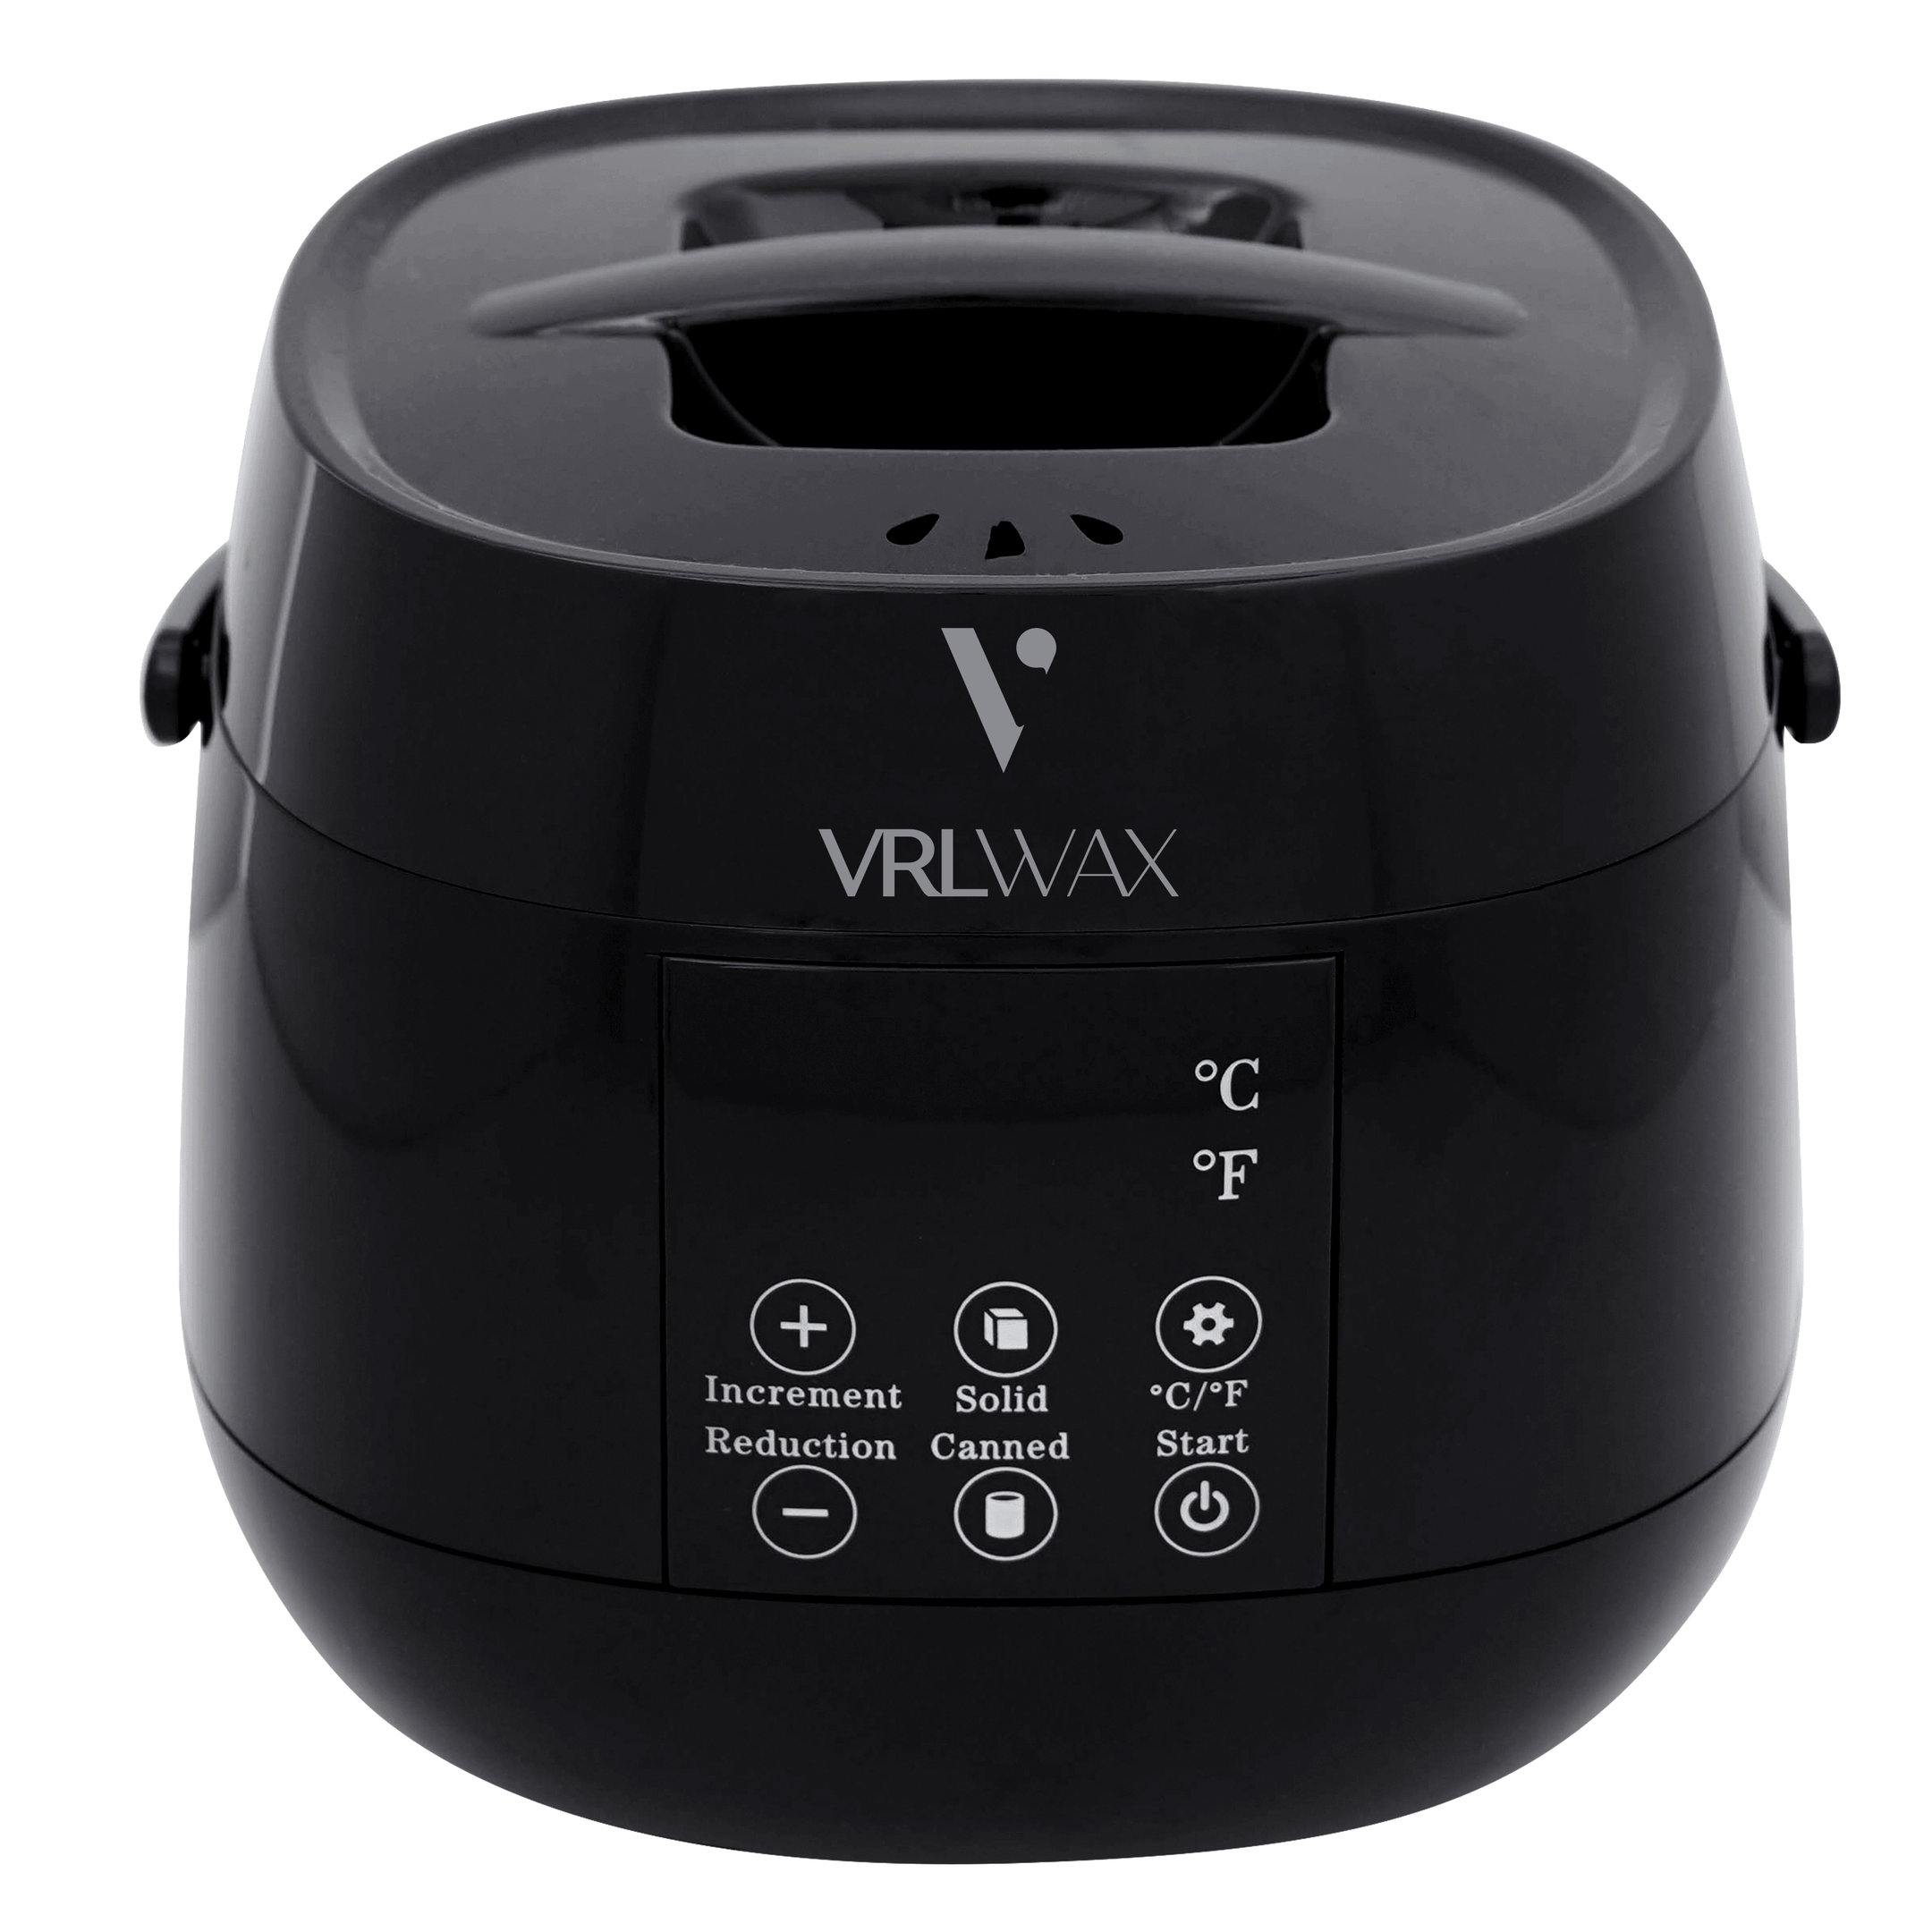 VRL Smart Vaxapparat